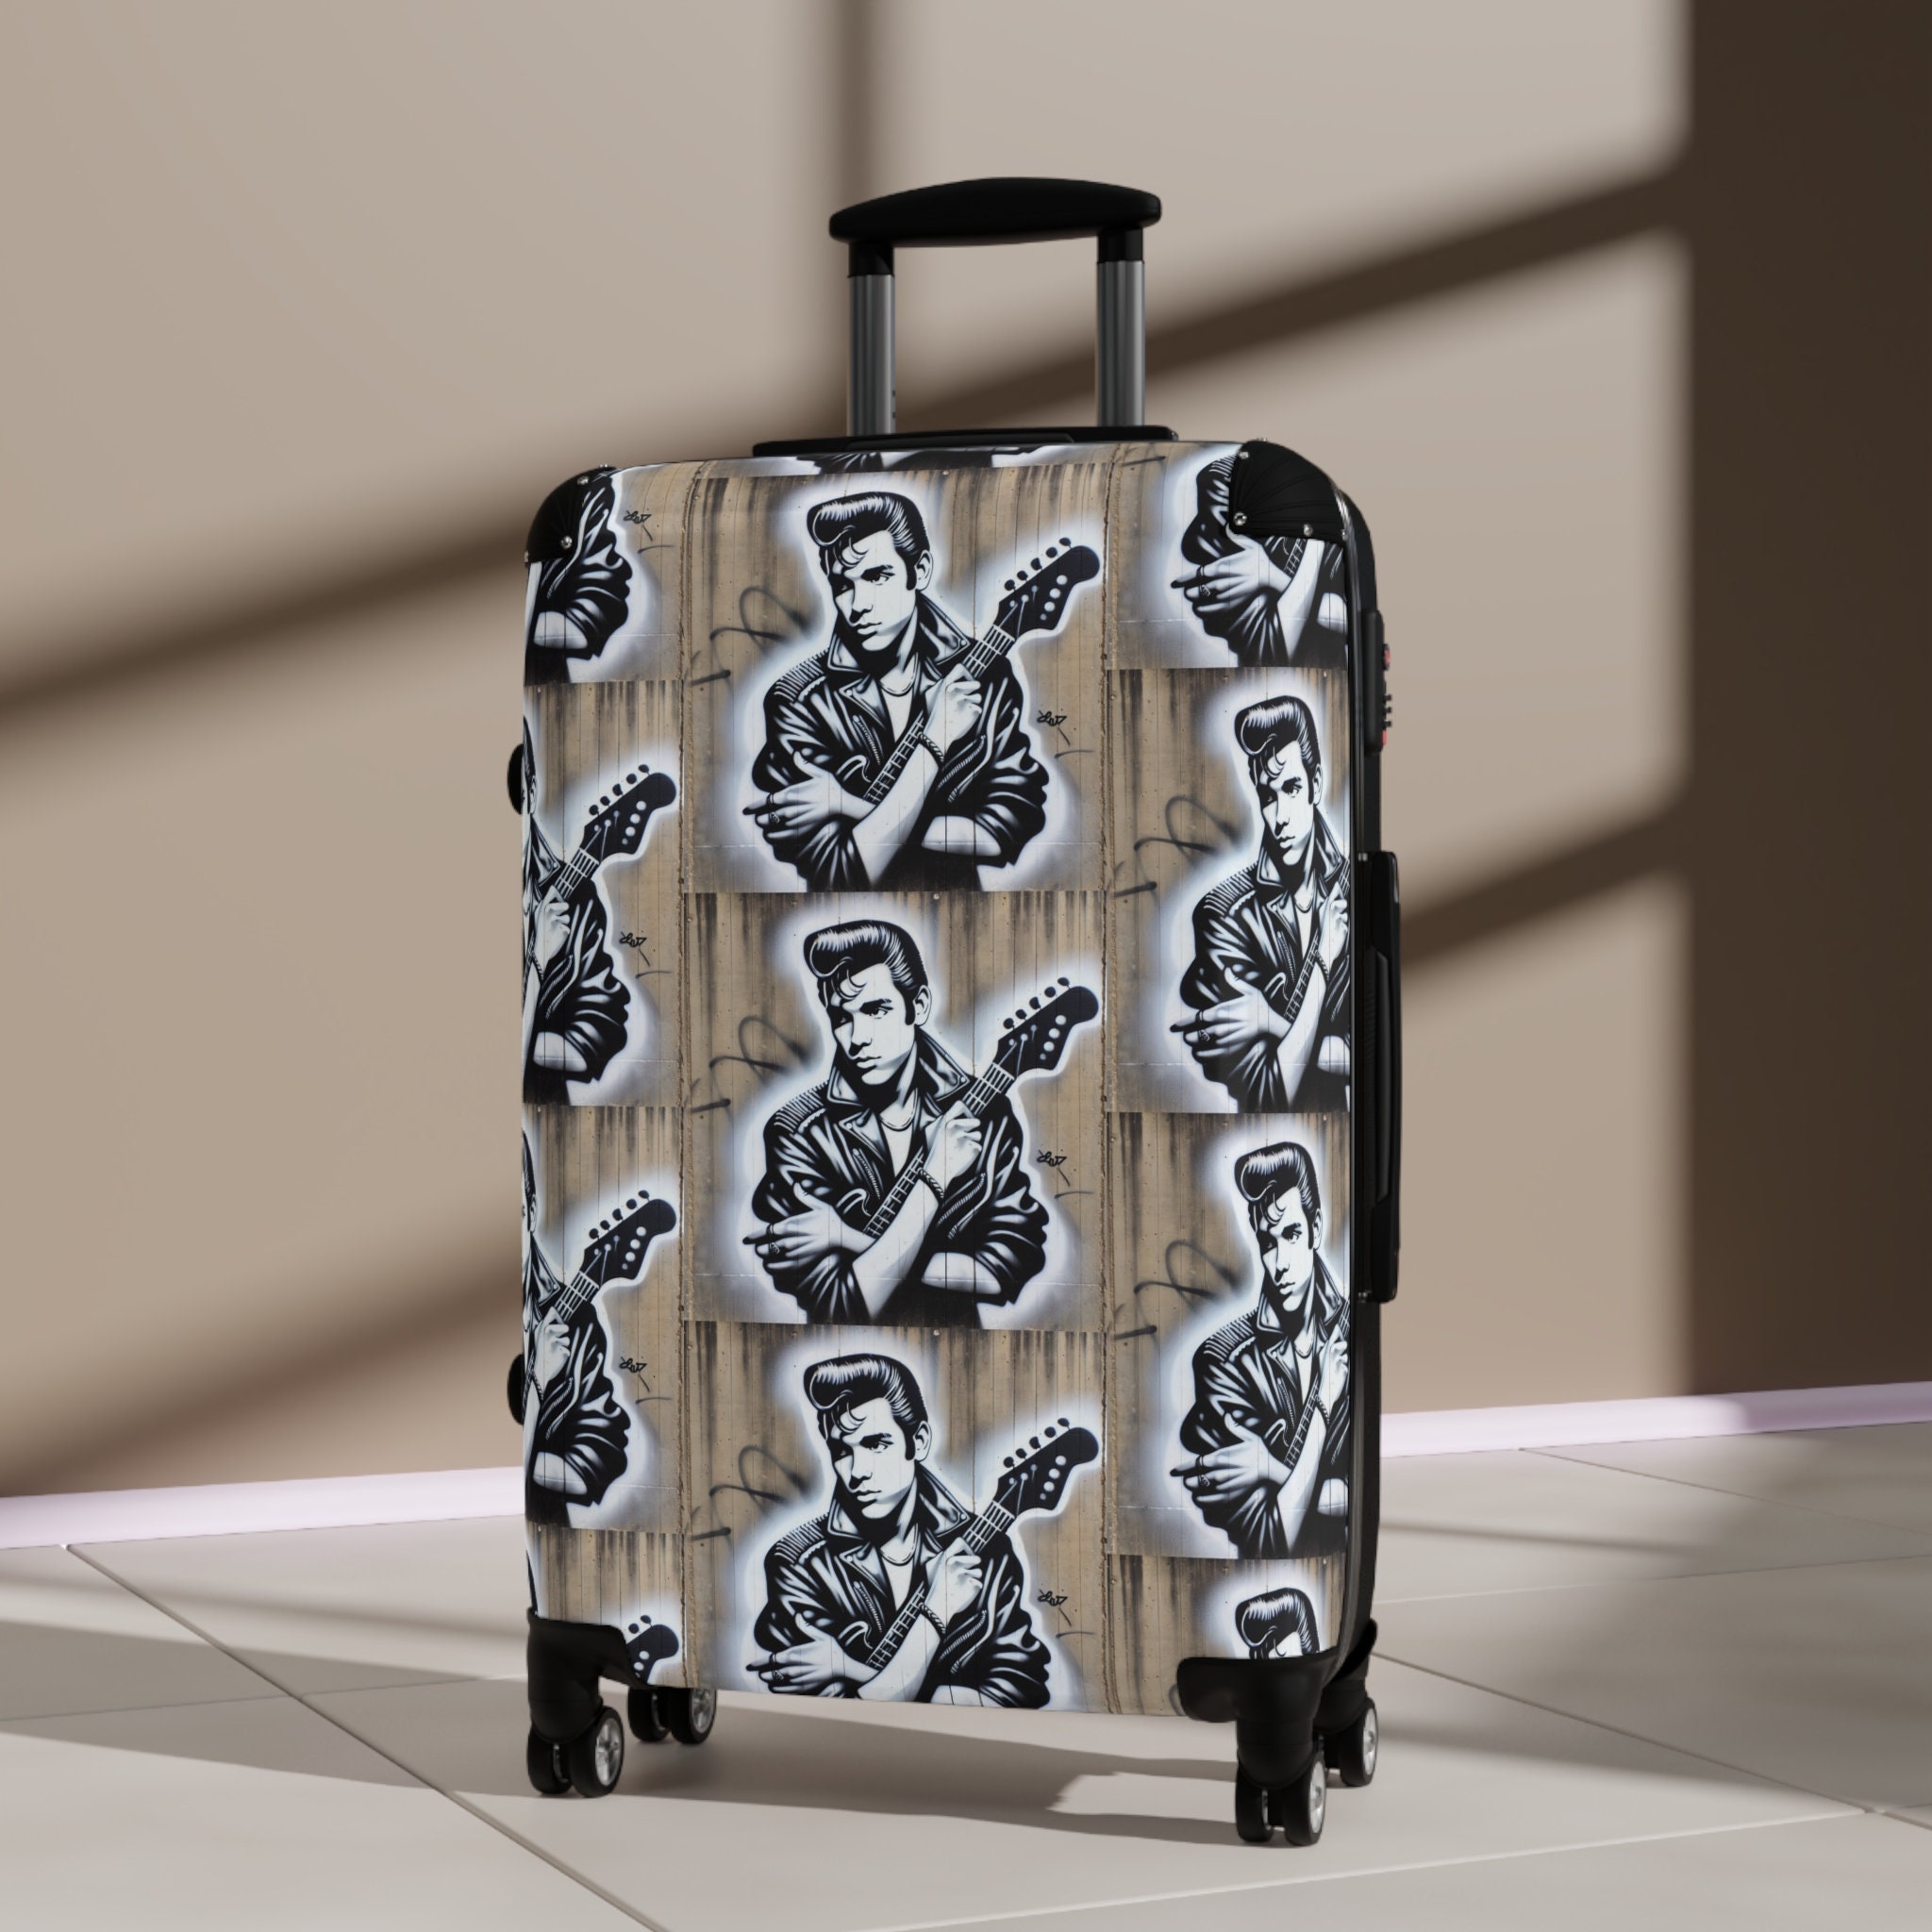 Elvis Presley travel suitcase